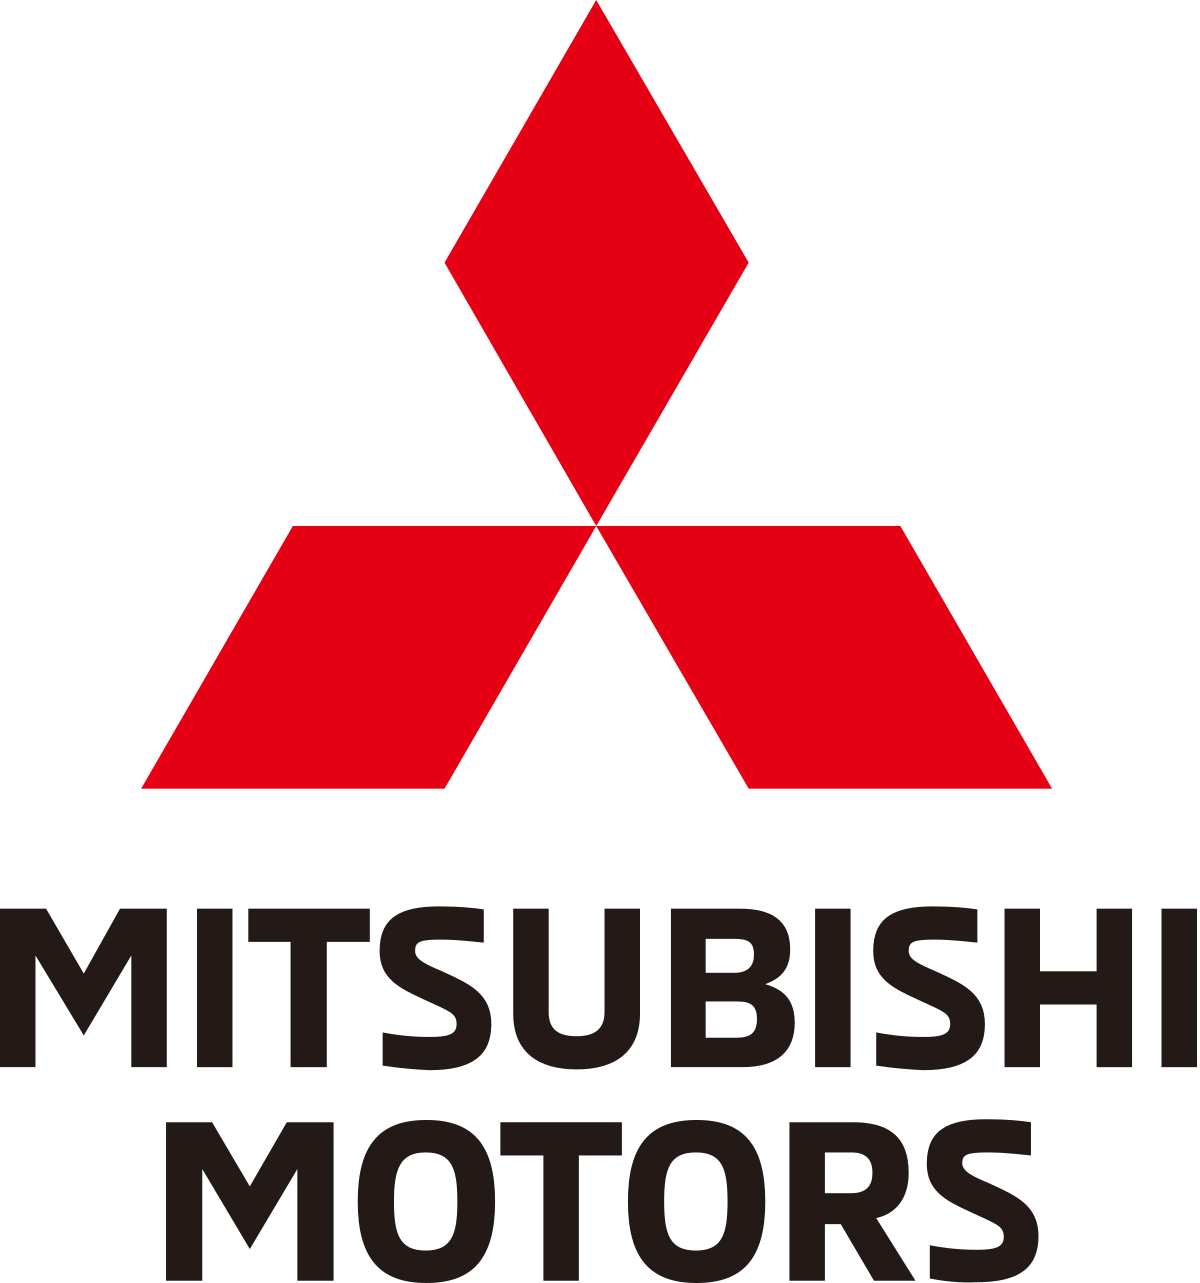 Two Red Diamonds Logo - Mitsubishi Motors